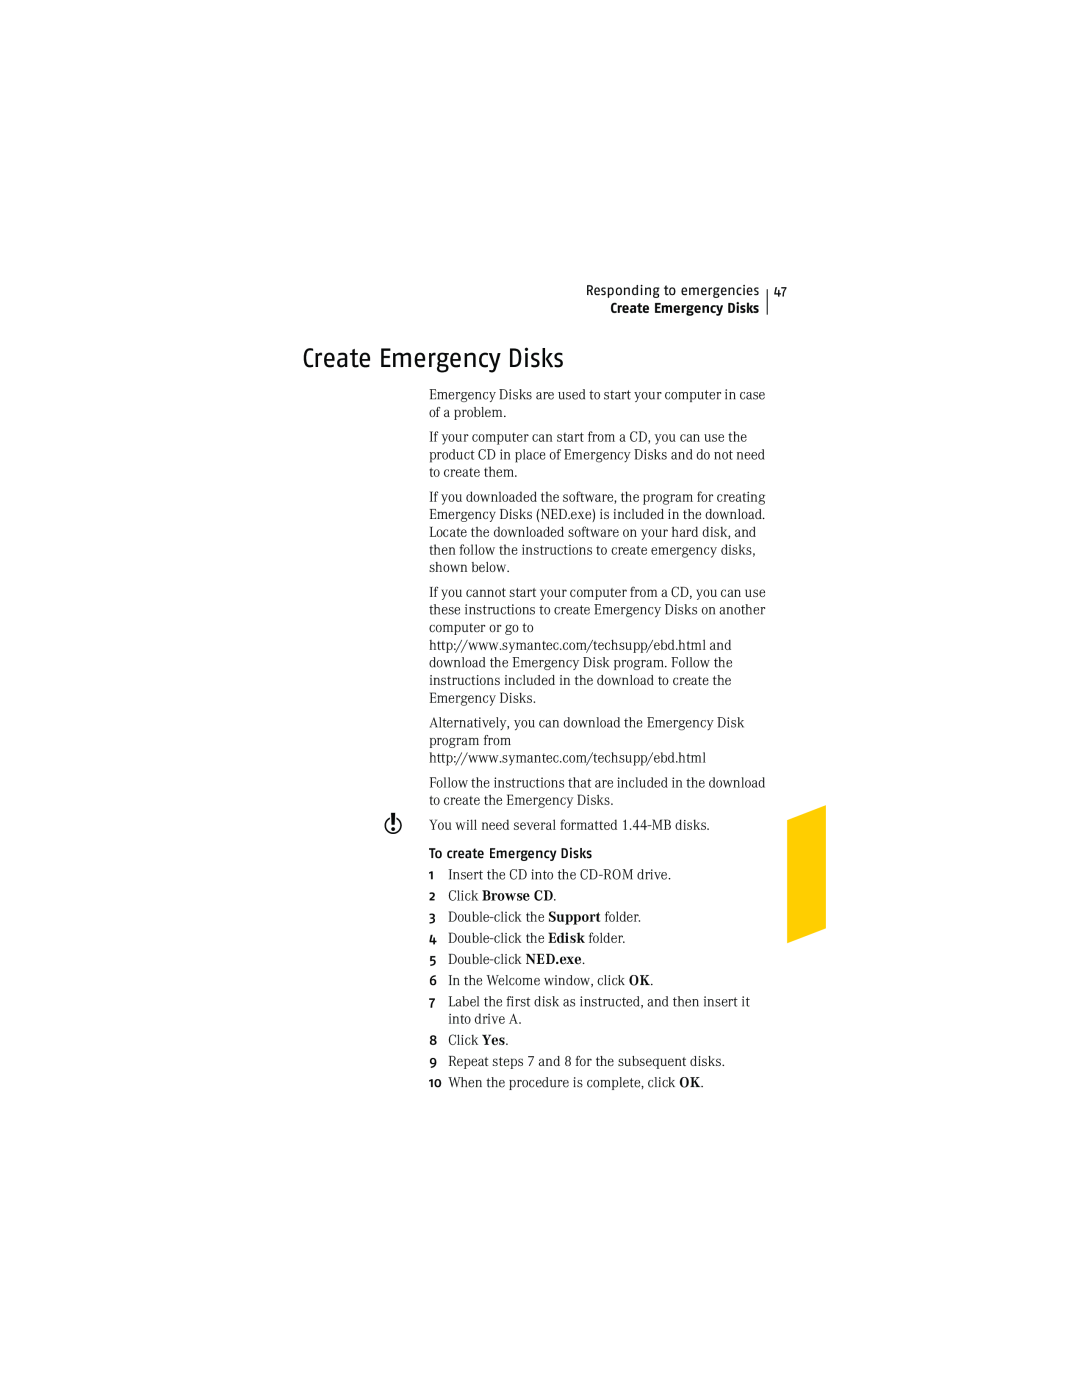 Symantec NIS2005 manual Create Emergency Disks, Click Browse CD 